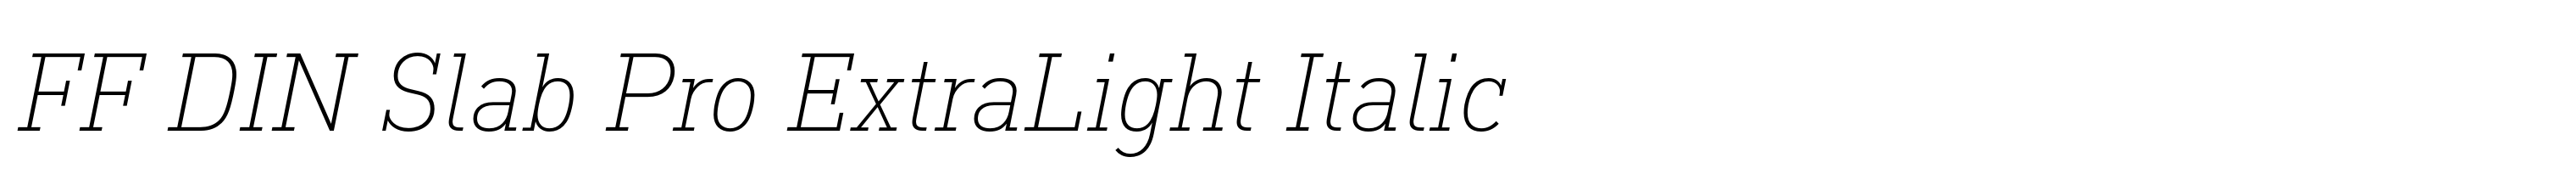 FF DIN Slab Pro ExtraLight Italic